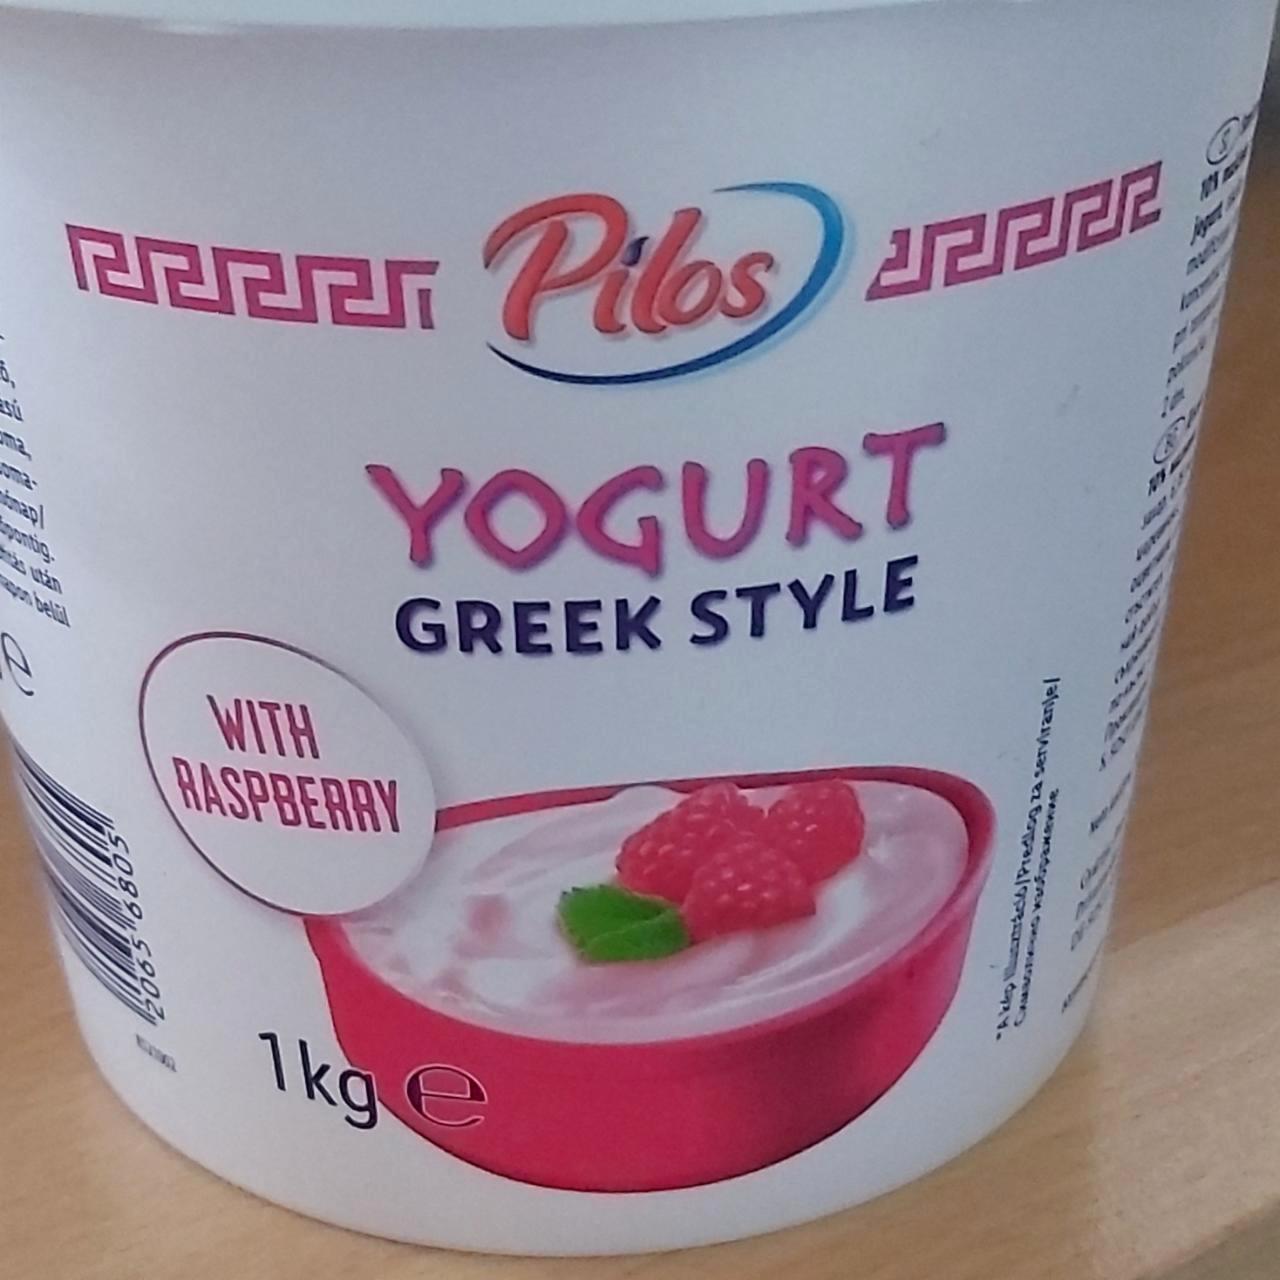 Képek - Yoghurt greek style with Raspberry Pilos